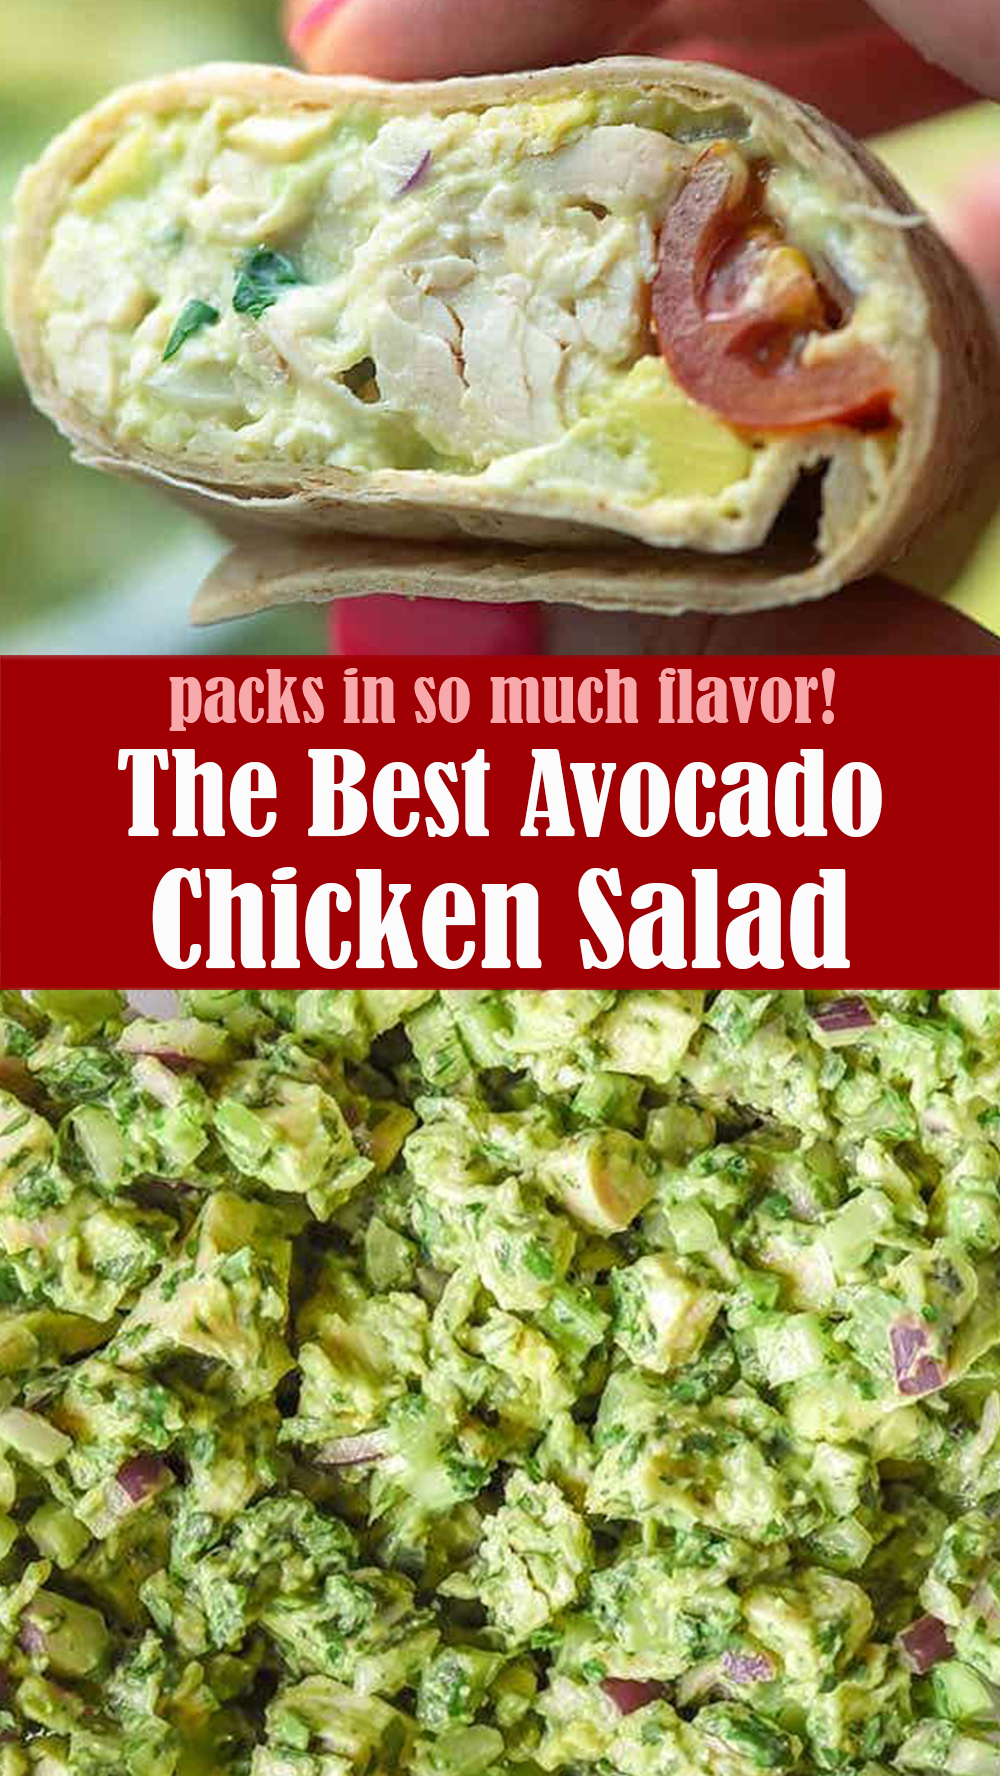 The Best Avocado Chicken Salad